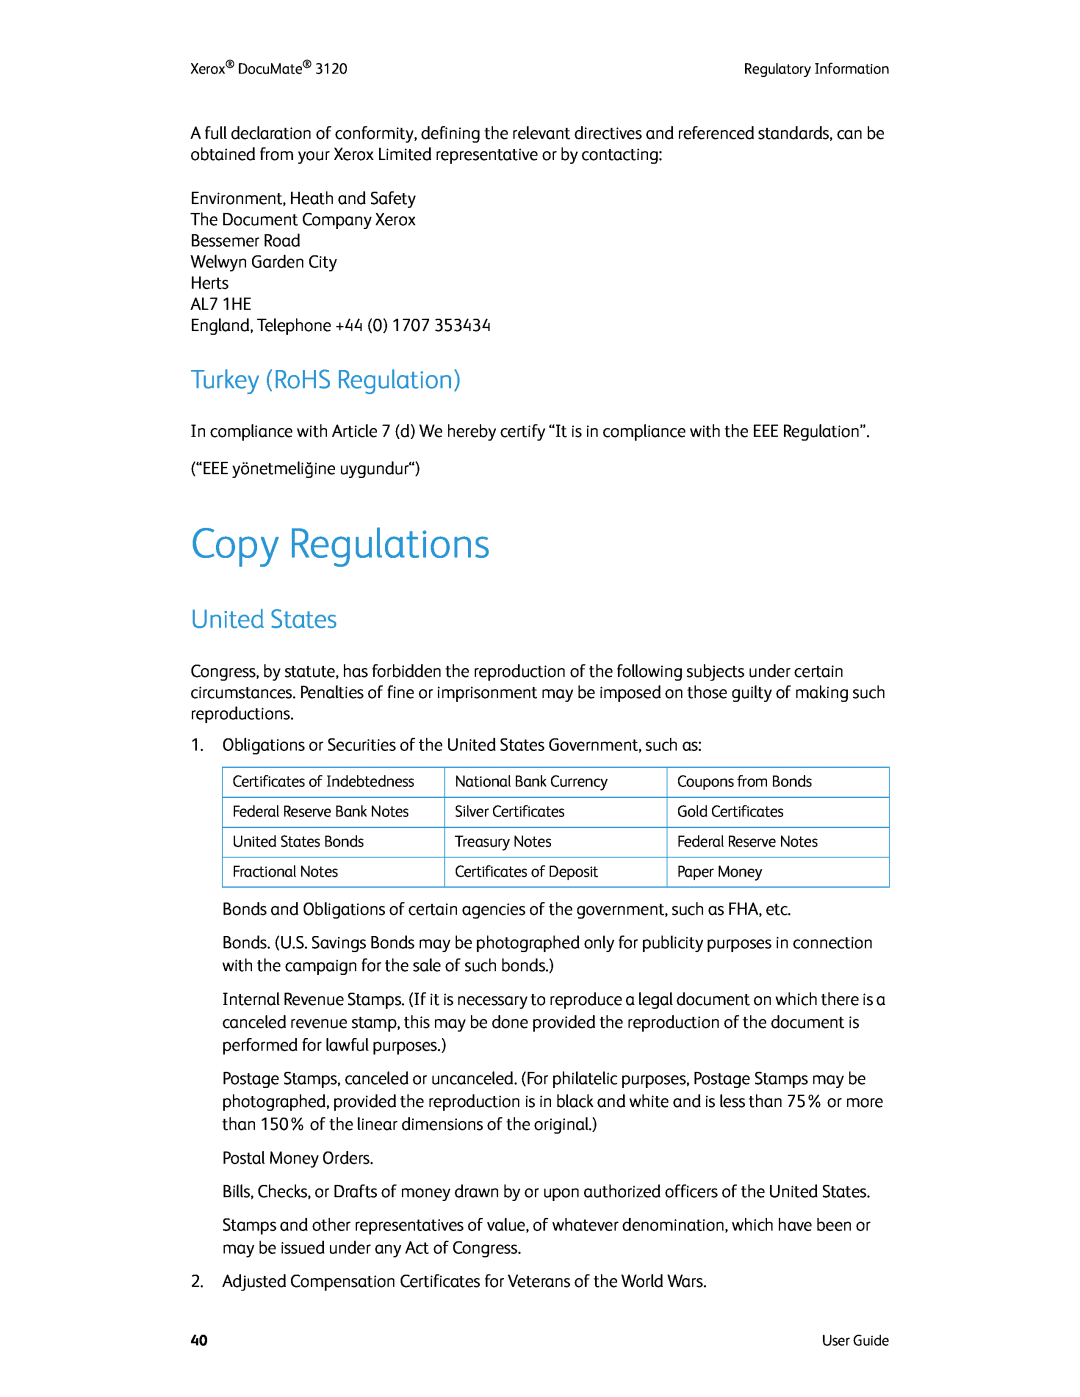 Xerox xerox manual Copy Regulations, Turkey RoHS Regulation, United States 